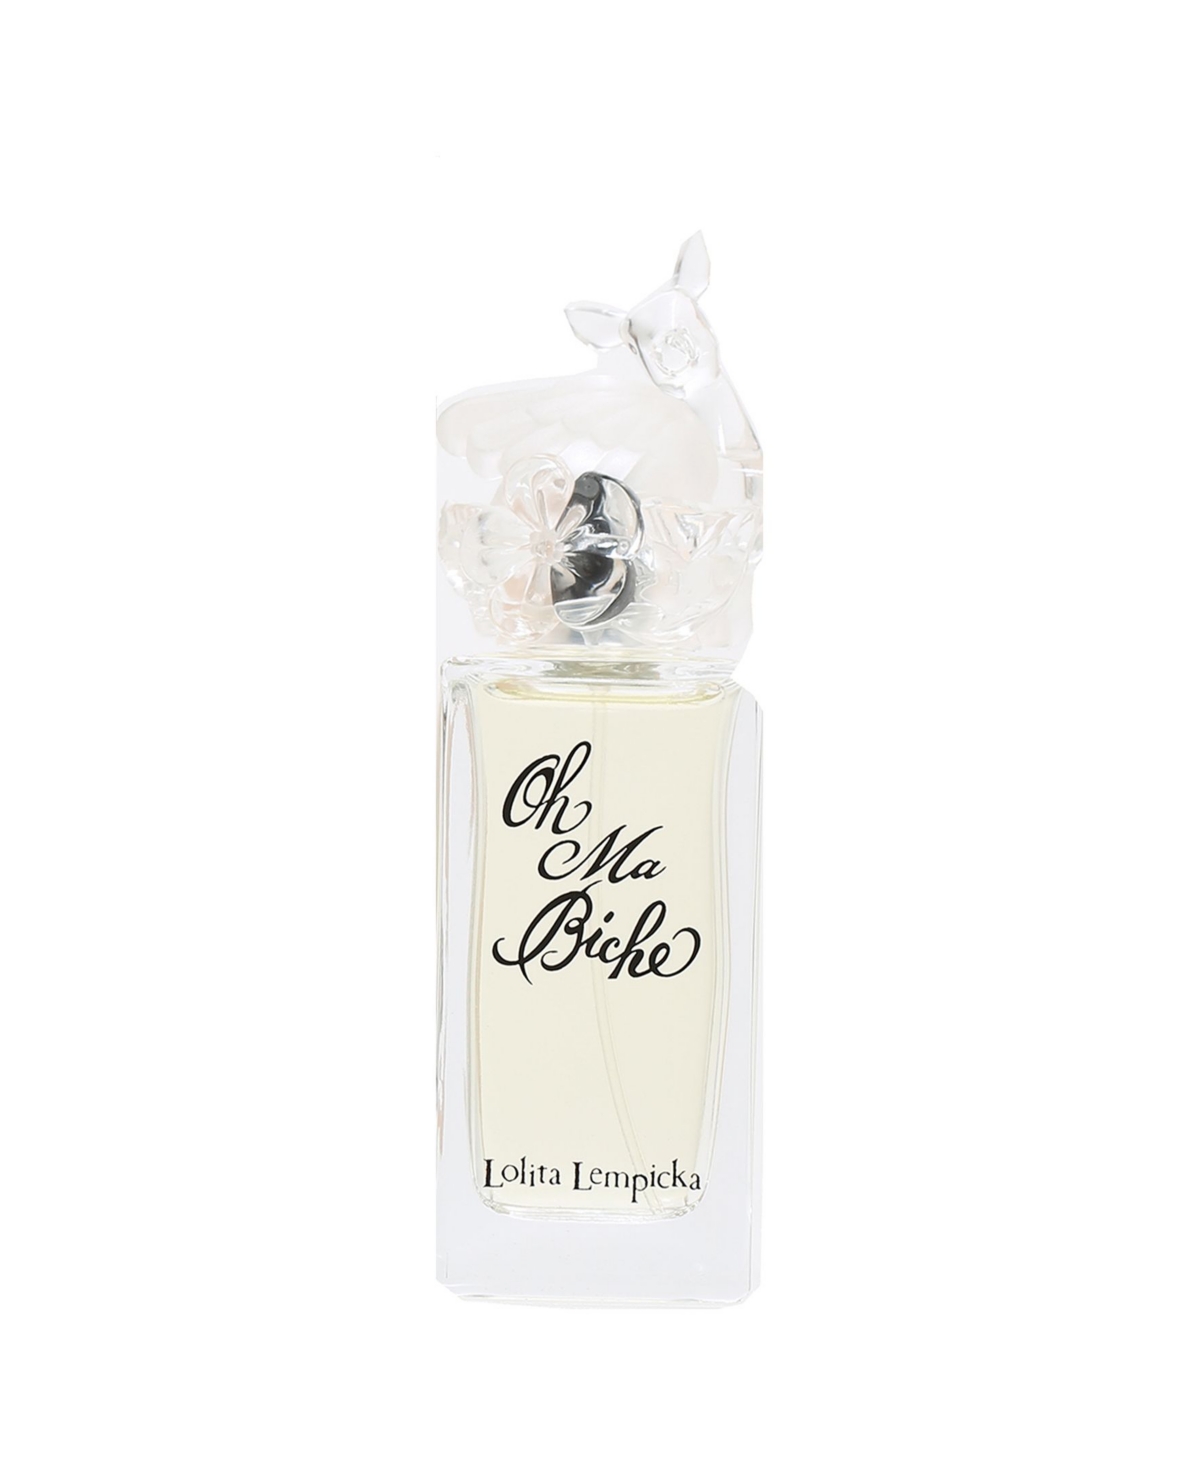 Oh Ma Biche Eau De Parfum Spray, 1.7 fl oz